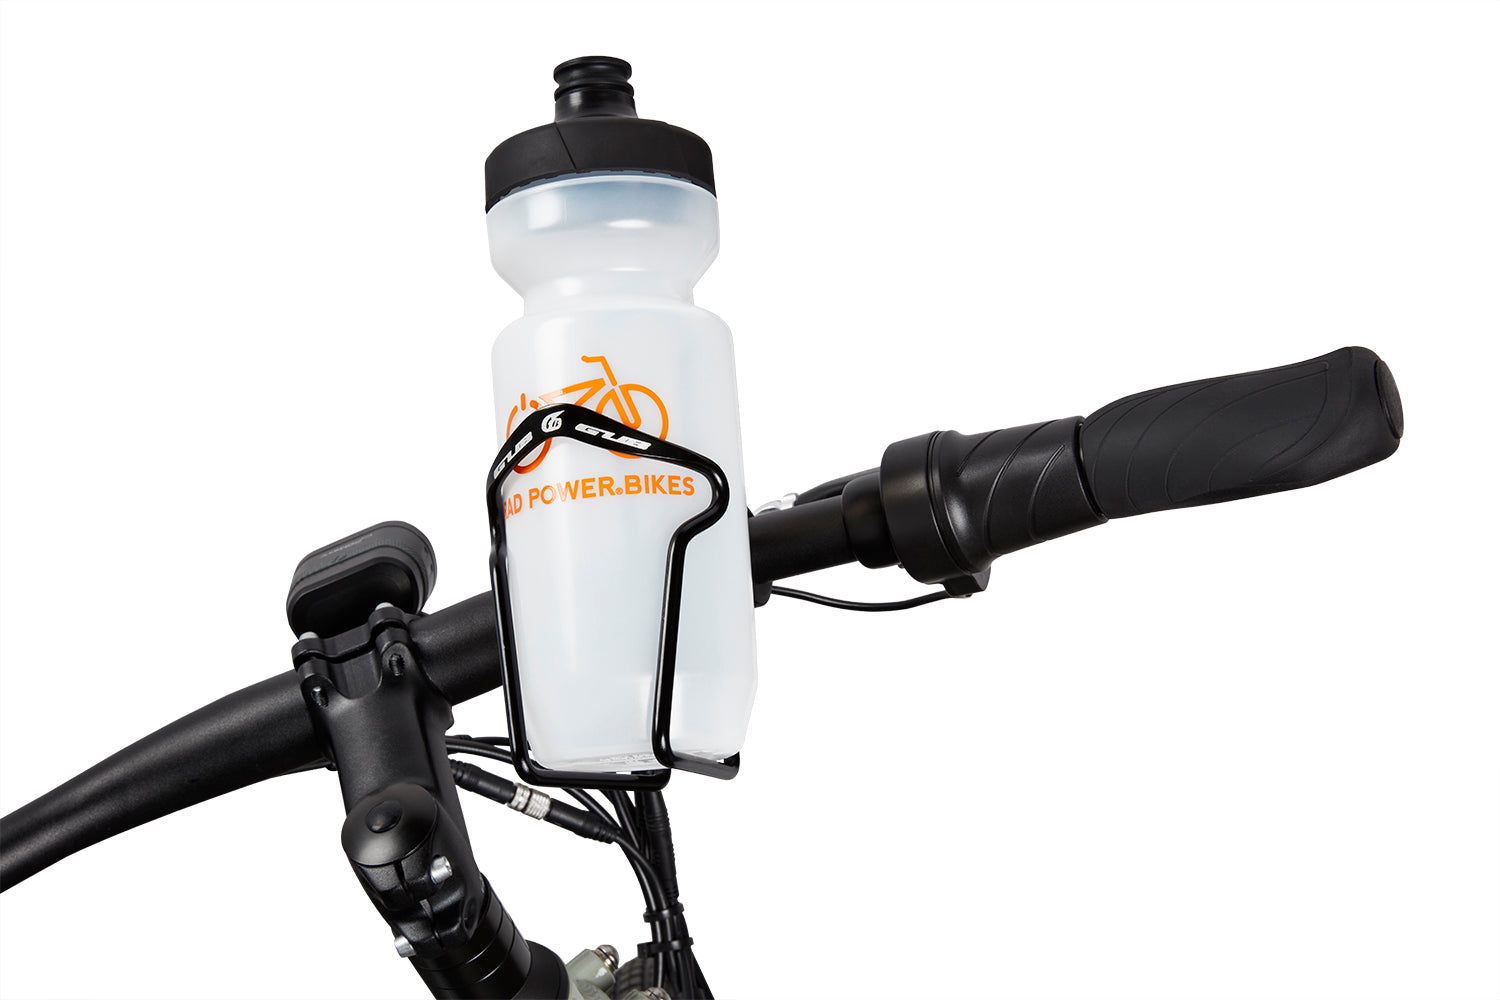 A Rad Power Bikes 22 ounce water bottle.